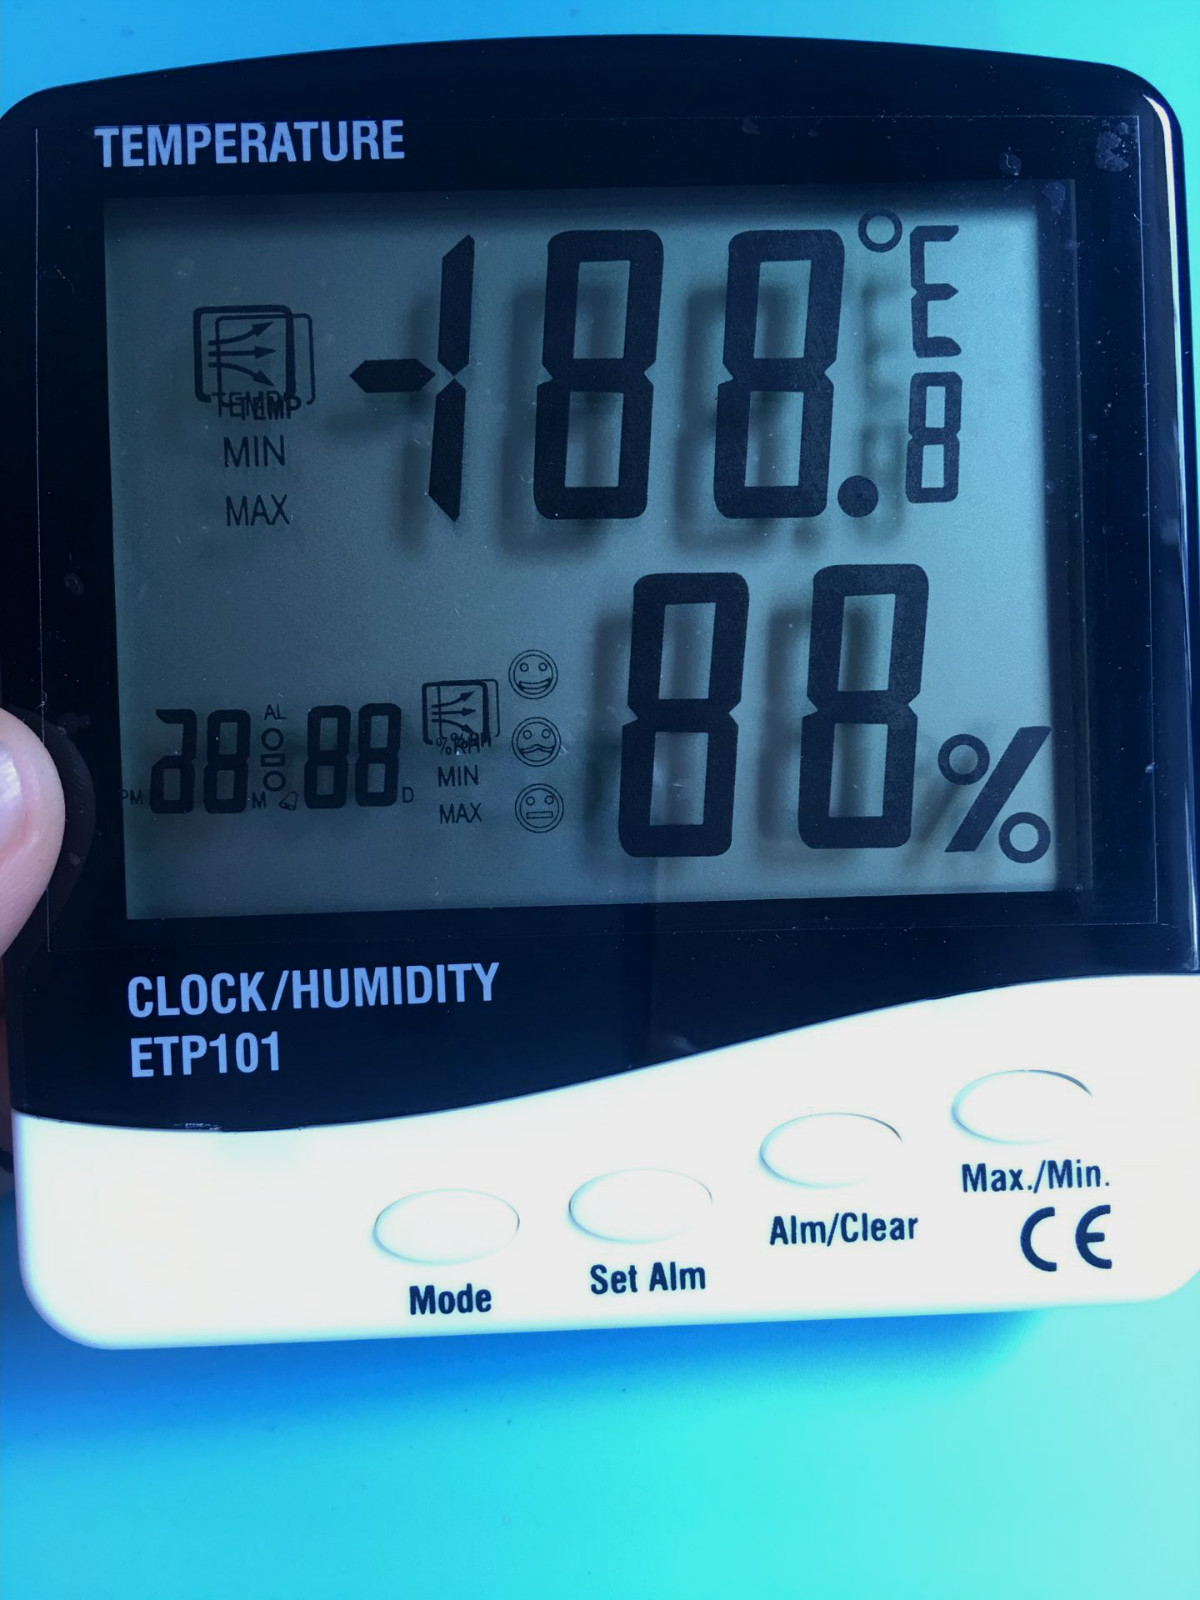 GENERAL 美国精耐ETP101温湿度计 数字温湿度计 超大显示屏温湿度计